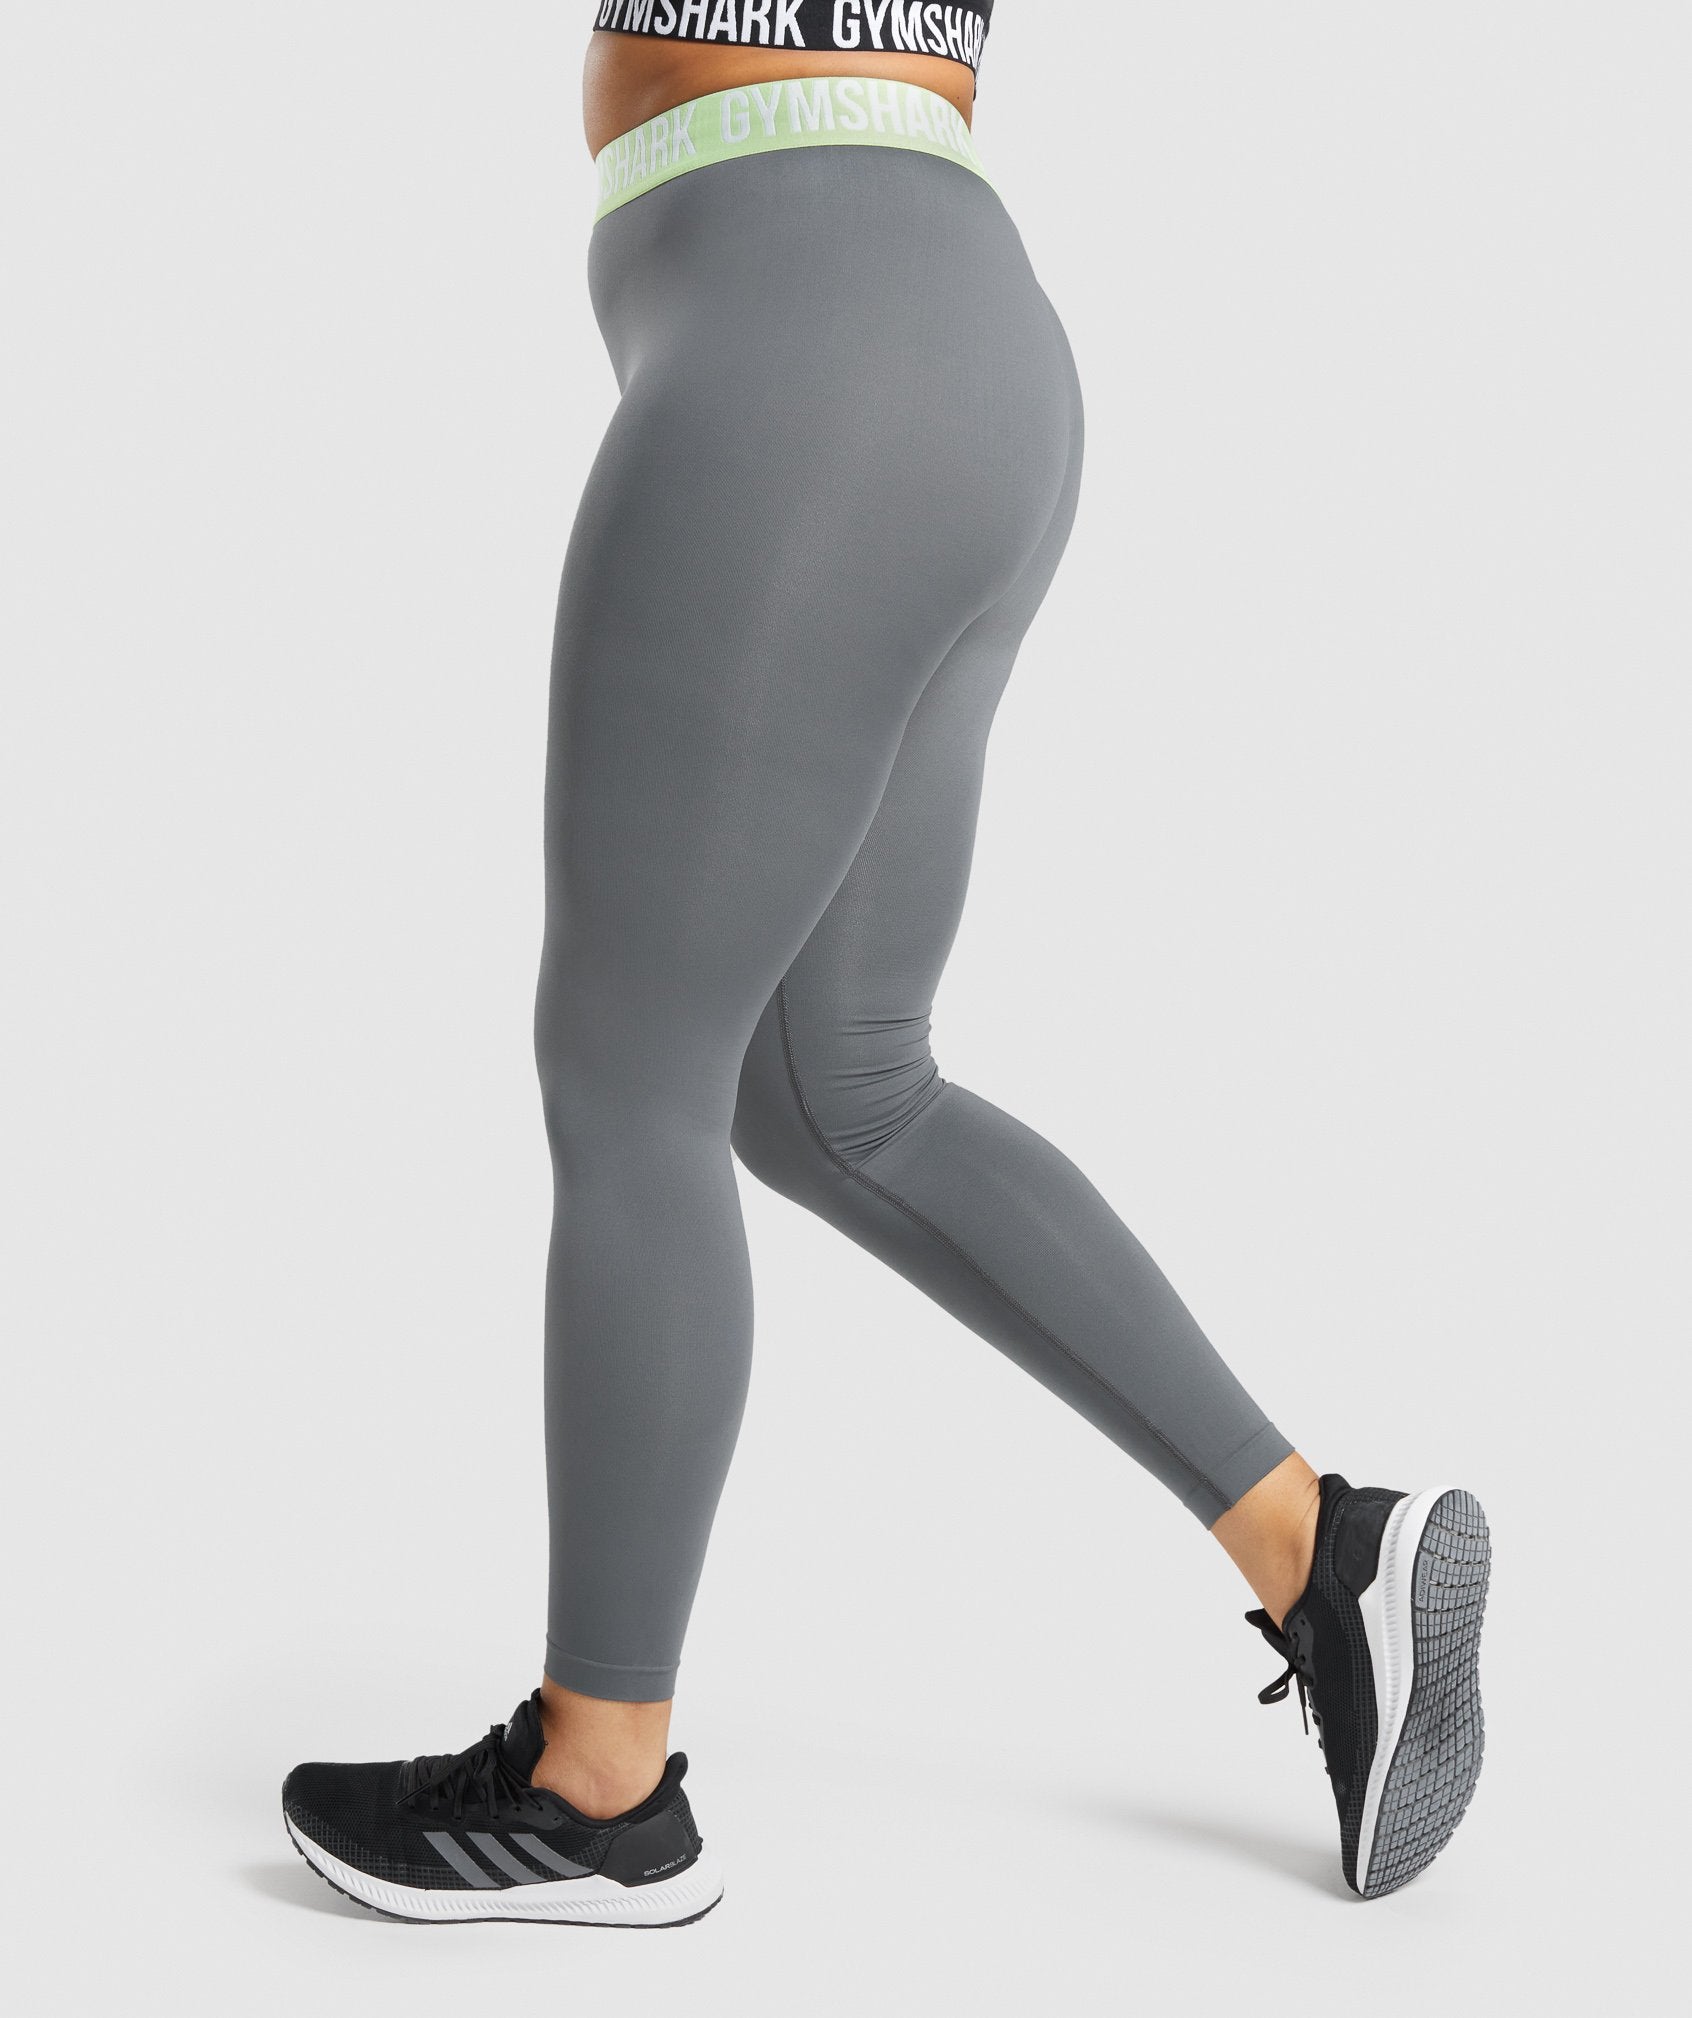 Gymshark Fit Seamless Legging XS- Charcoal/White, Women's Fashion